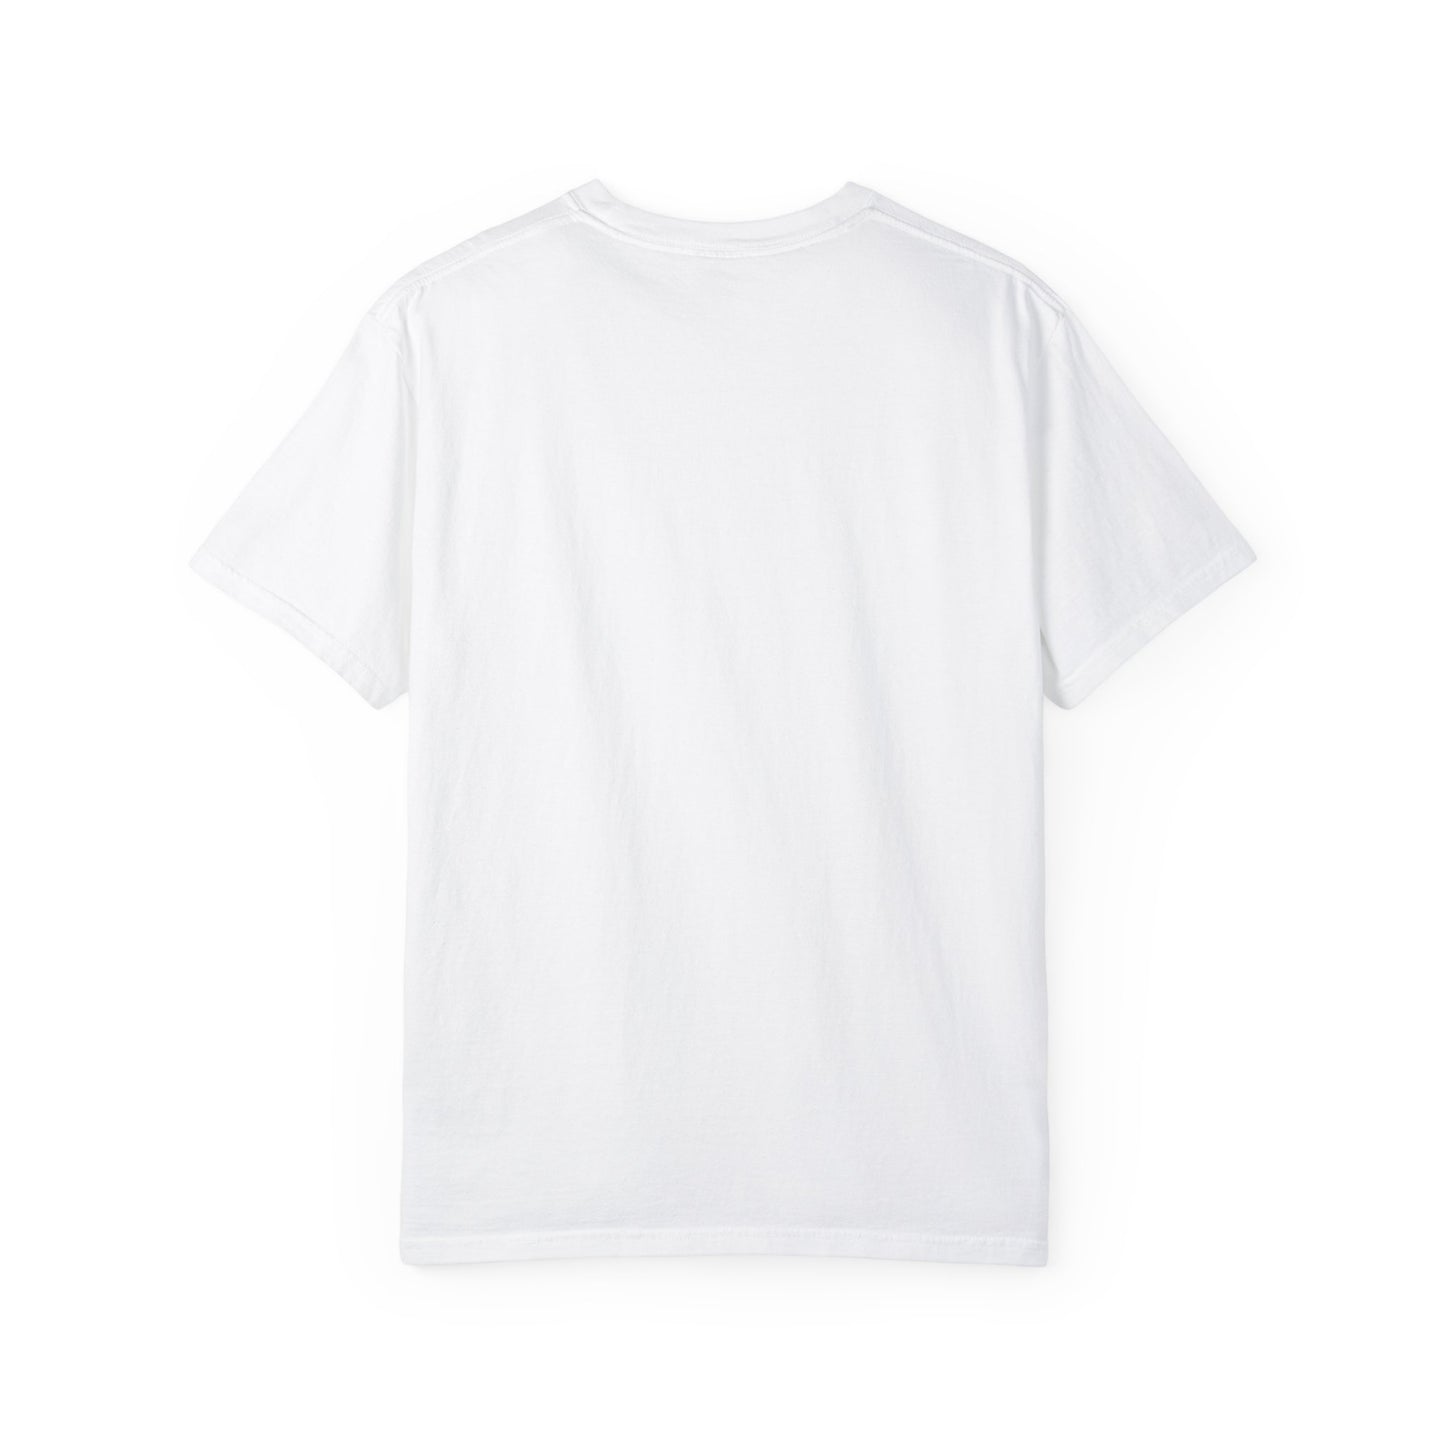 "Chasing Daylight" Unisex Garment-Dyed T-shirt